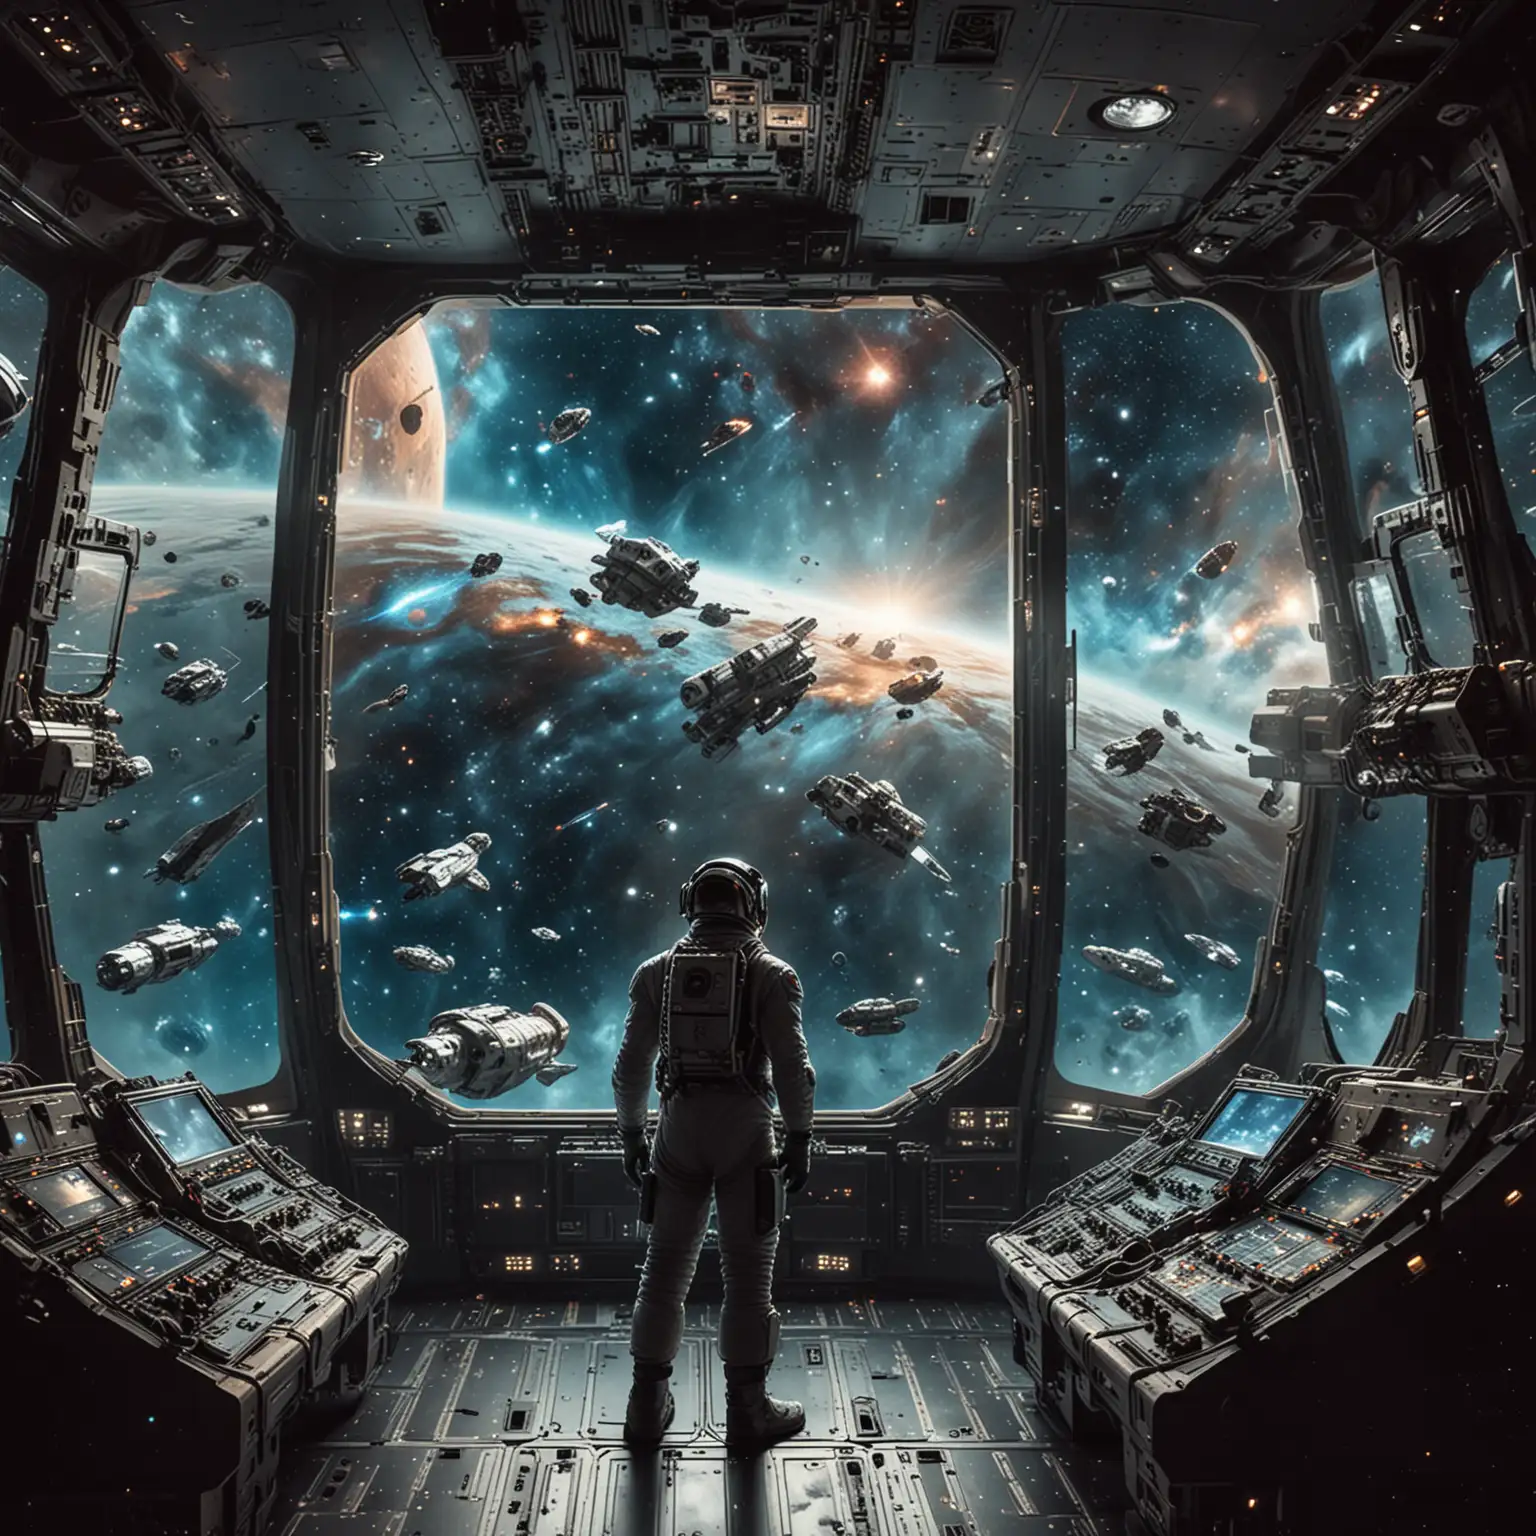 Astronaut in Command Centre Observes Fleet in Nebula